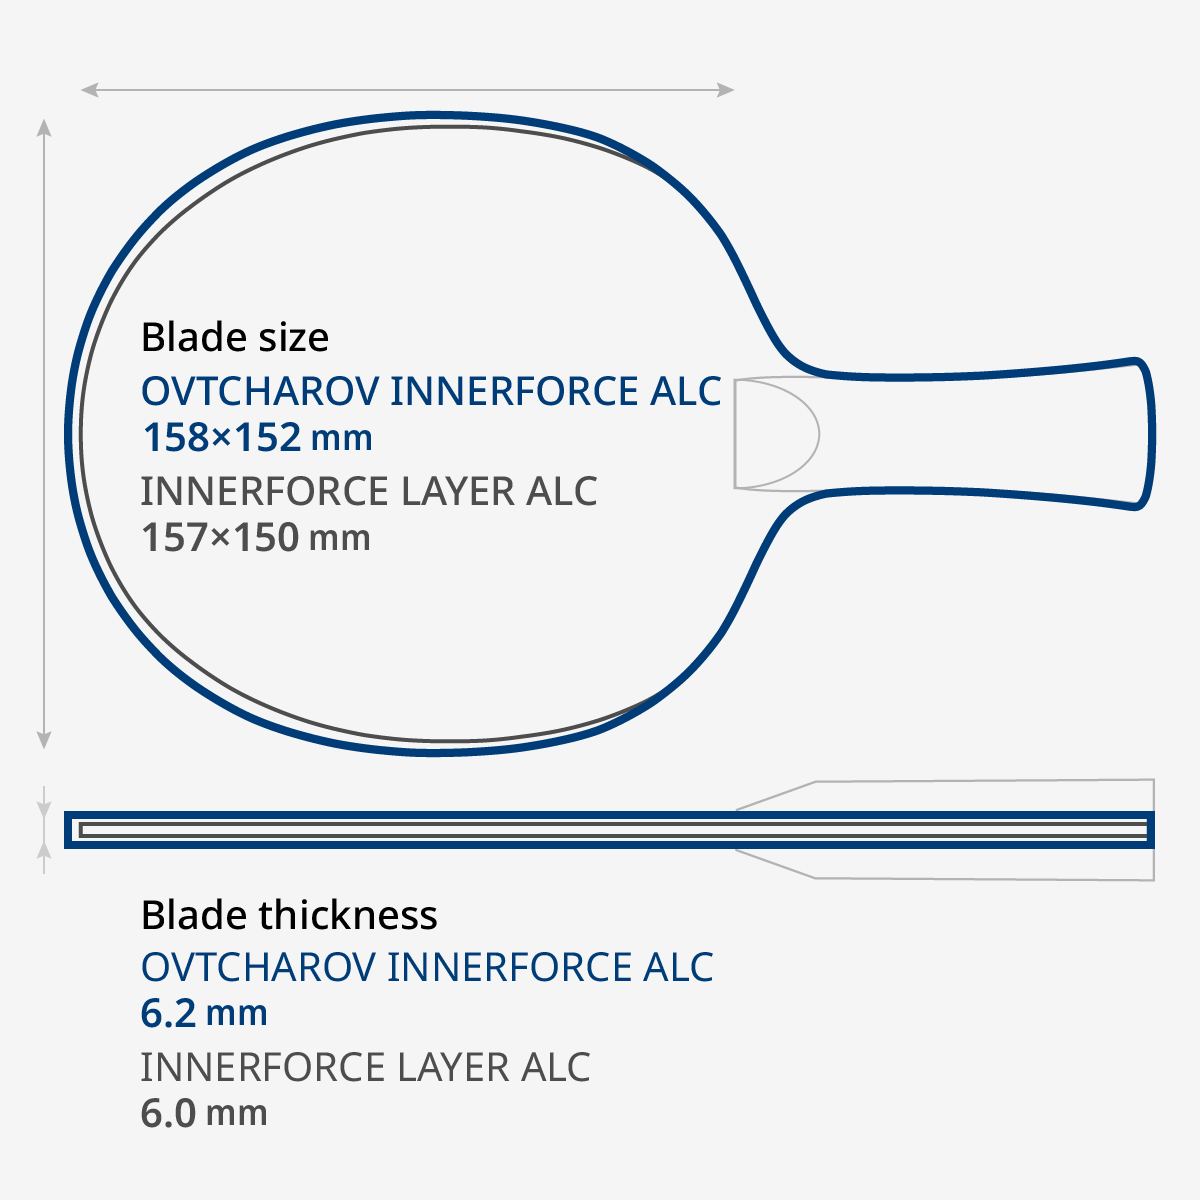 Ovtcharov Innerforce ALC